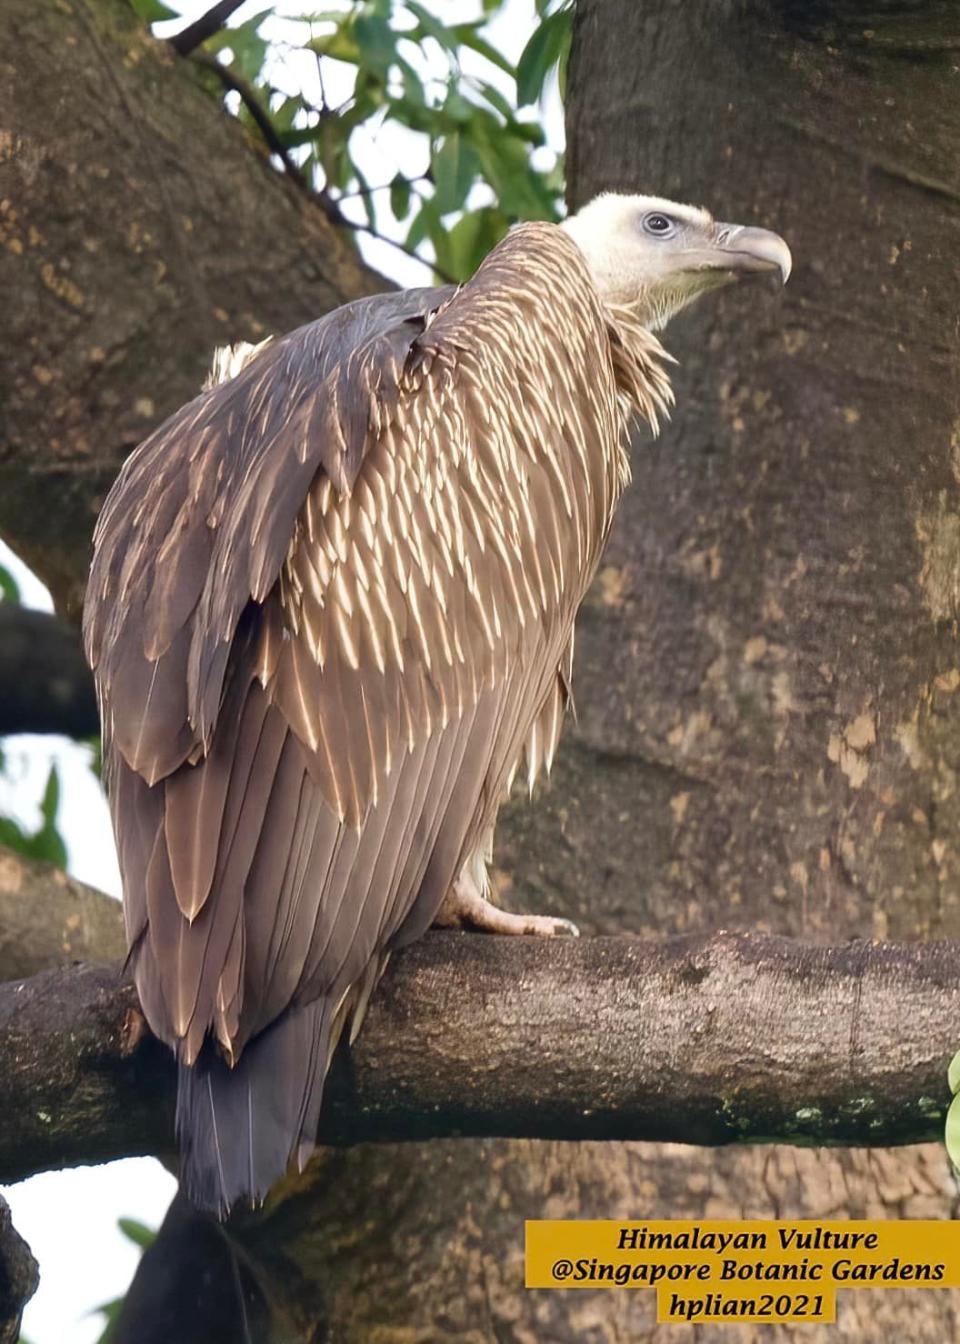 A Himalayan vulture in Singapore Botanic Gardens, 30 Dec 2021. (Photo: HP Lian/Facebook)